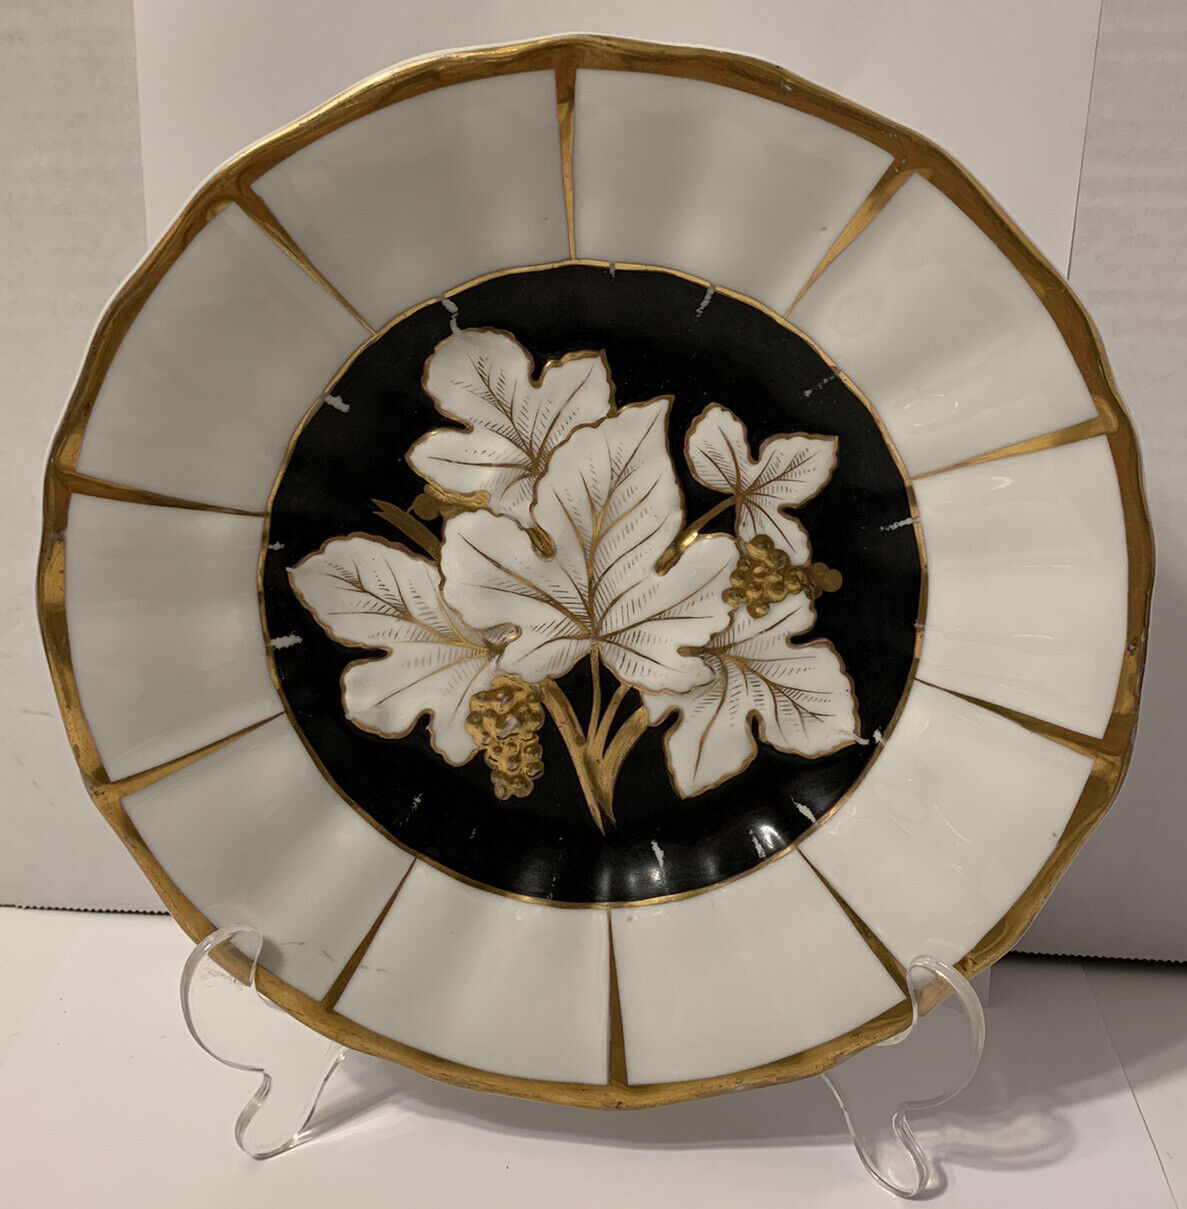 RARE c. 1850s BPM Buckau Buckauer Porcelain Raised Relief Plate - 9”